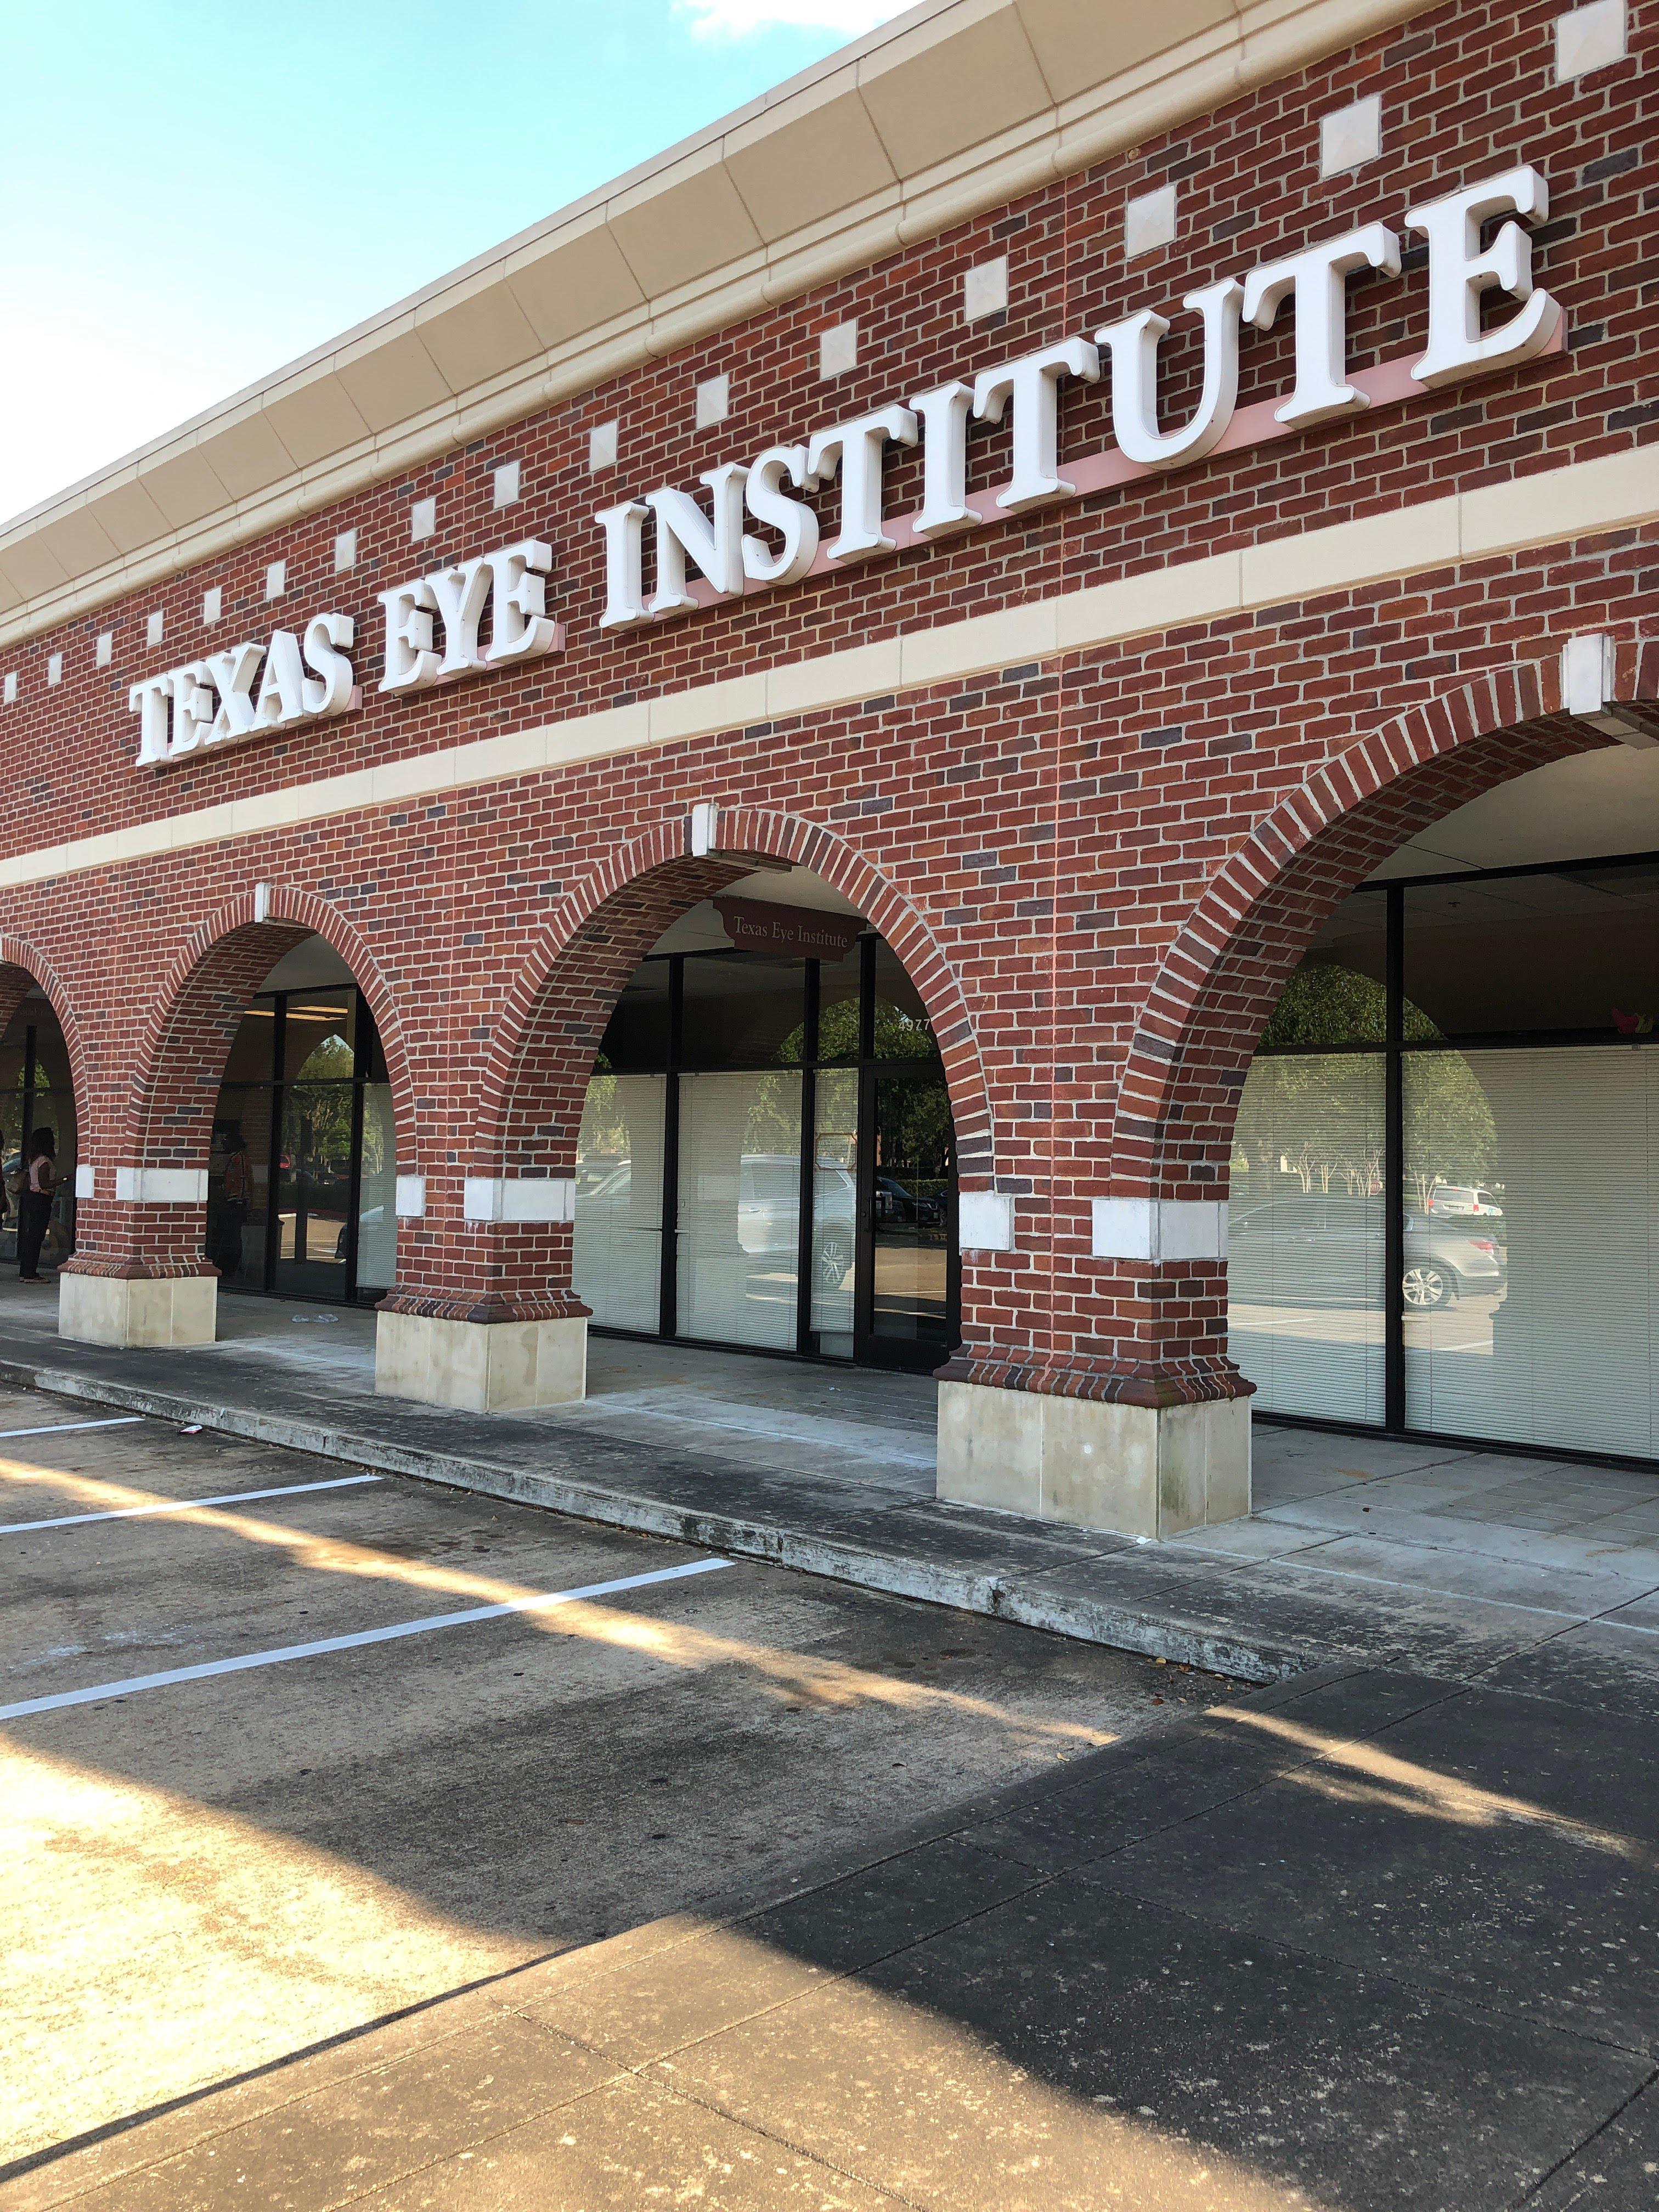 Texas Eye Institute